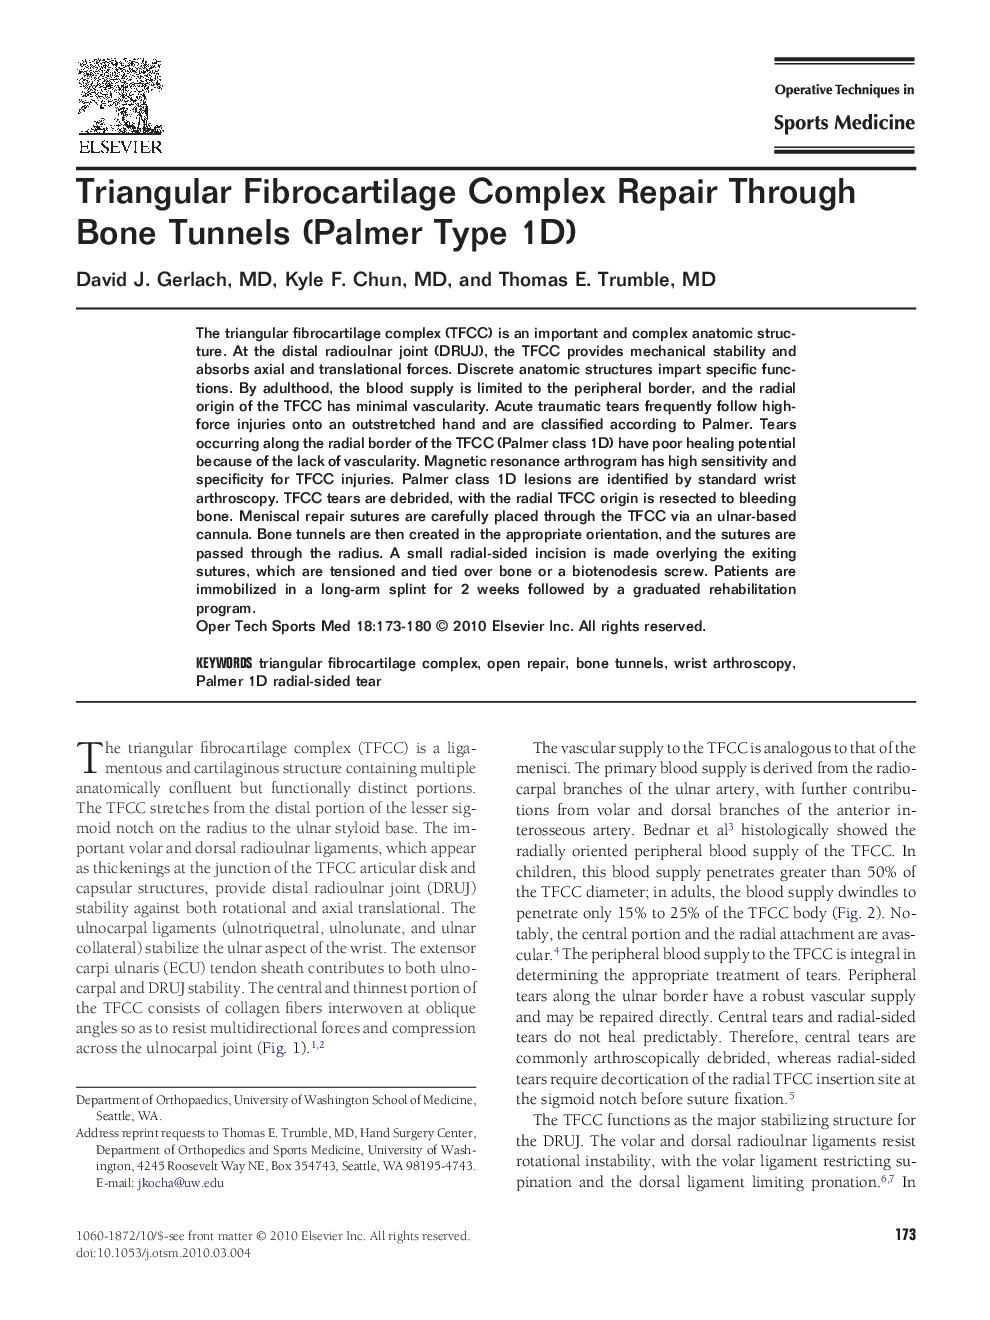 Triangular Fibrocartilage Complex Repair Through Bone Tunnels (Palmer Type 1D)